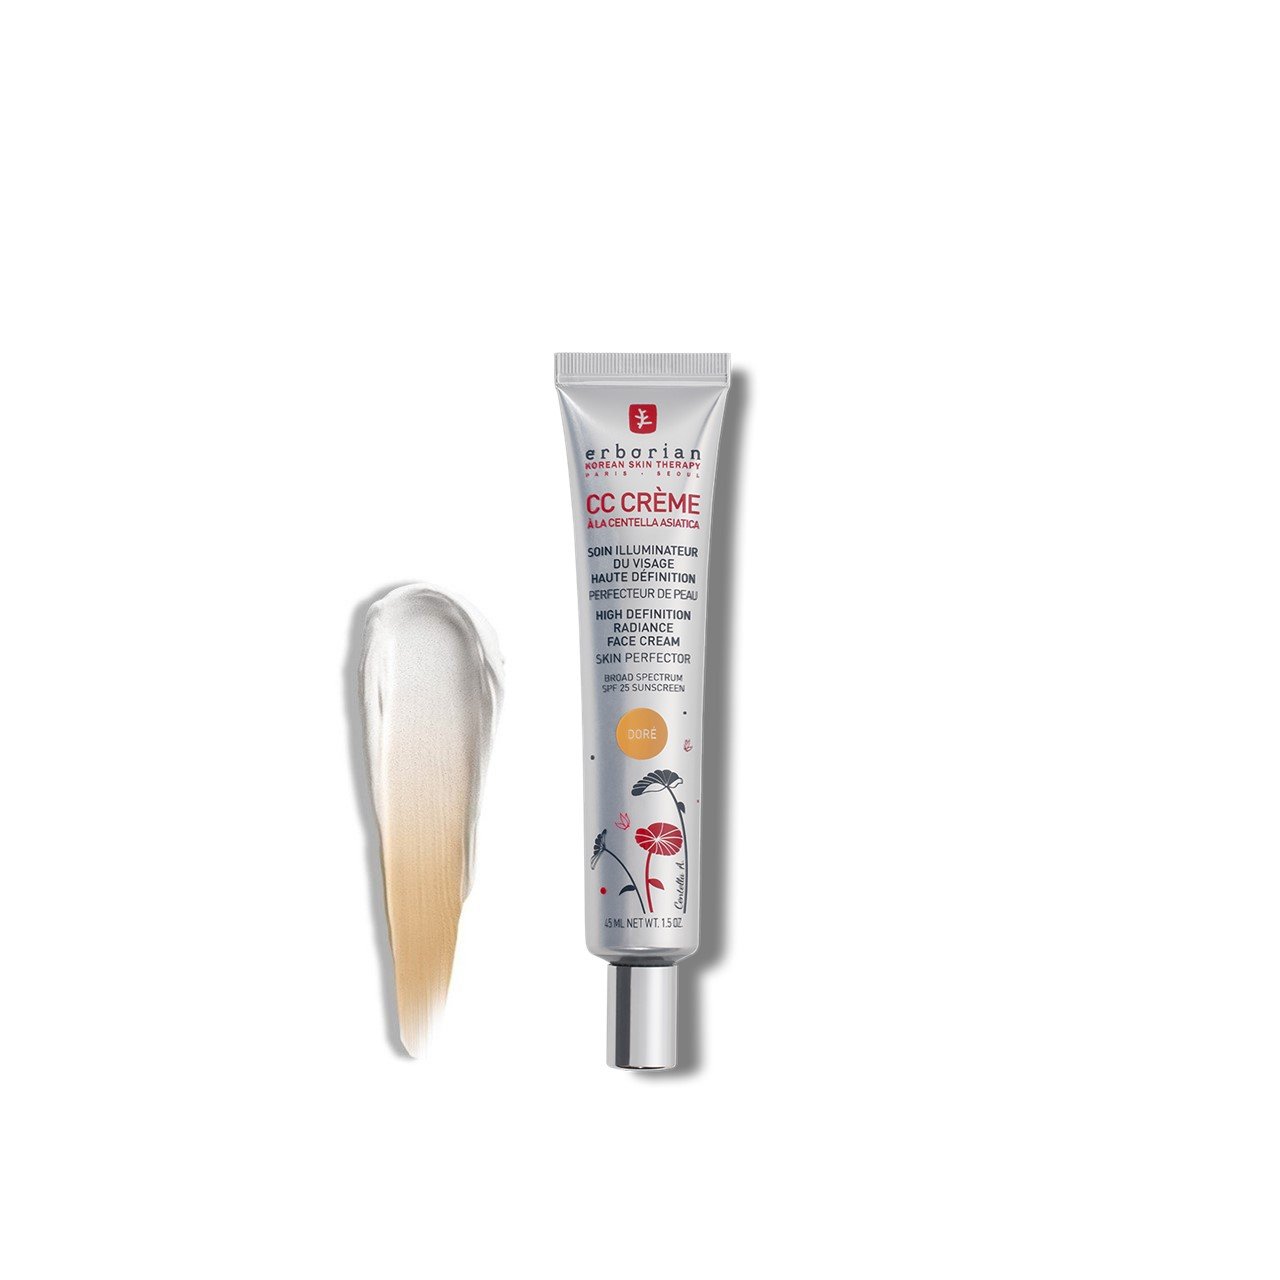 Erborian CC Crème High Definition Radiance Cream SPF25 Doré 45ml (1.52fl oz)